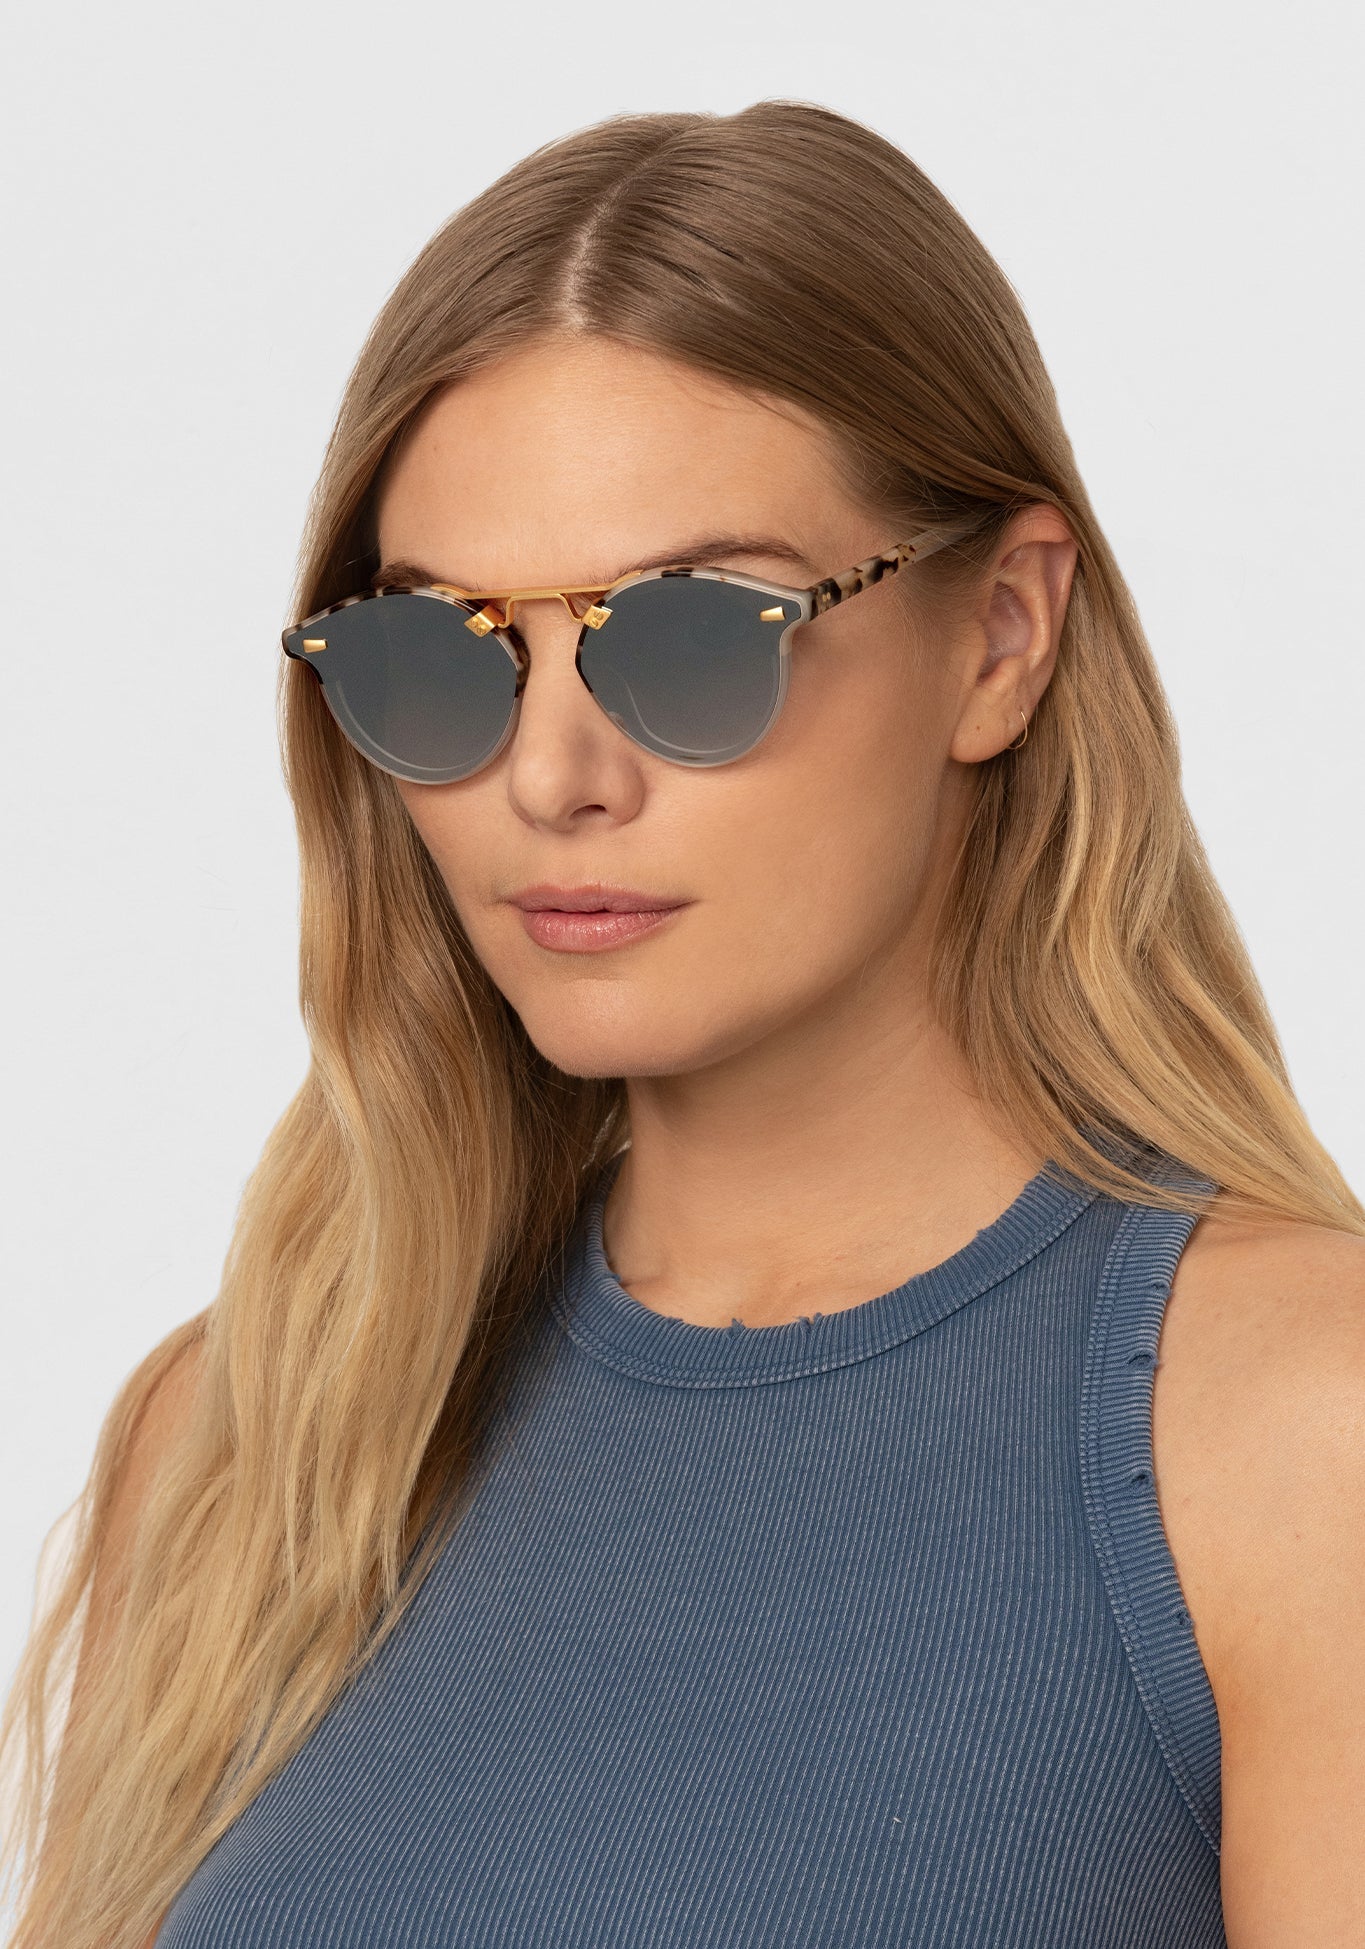 STL NYLON | Matte Oyster to Crystal 24K Mirror Polarized Handcrafted, luxury tortoise shell acetate KREWE sunglasses womens model | Model: Maritza